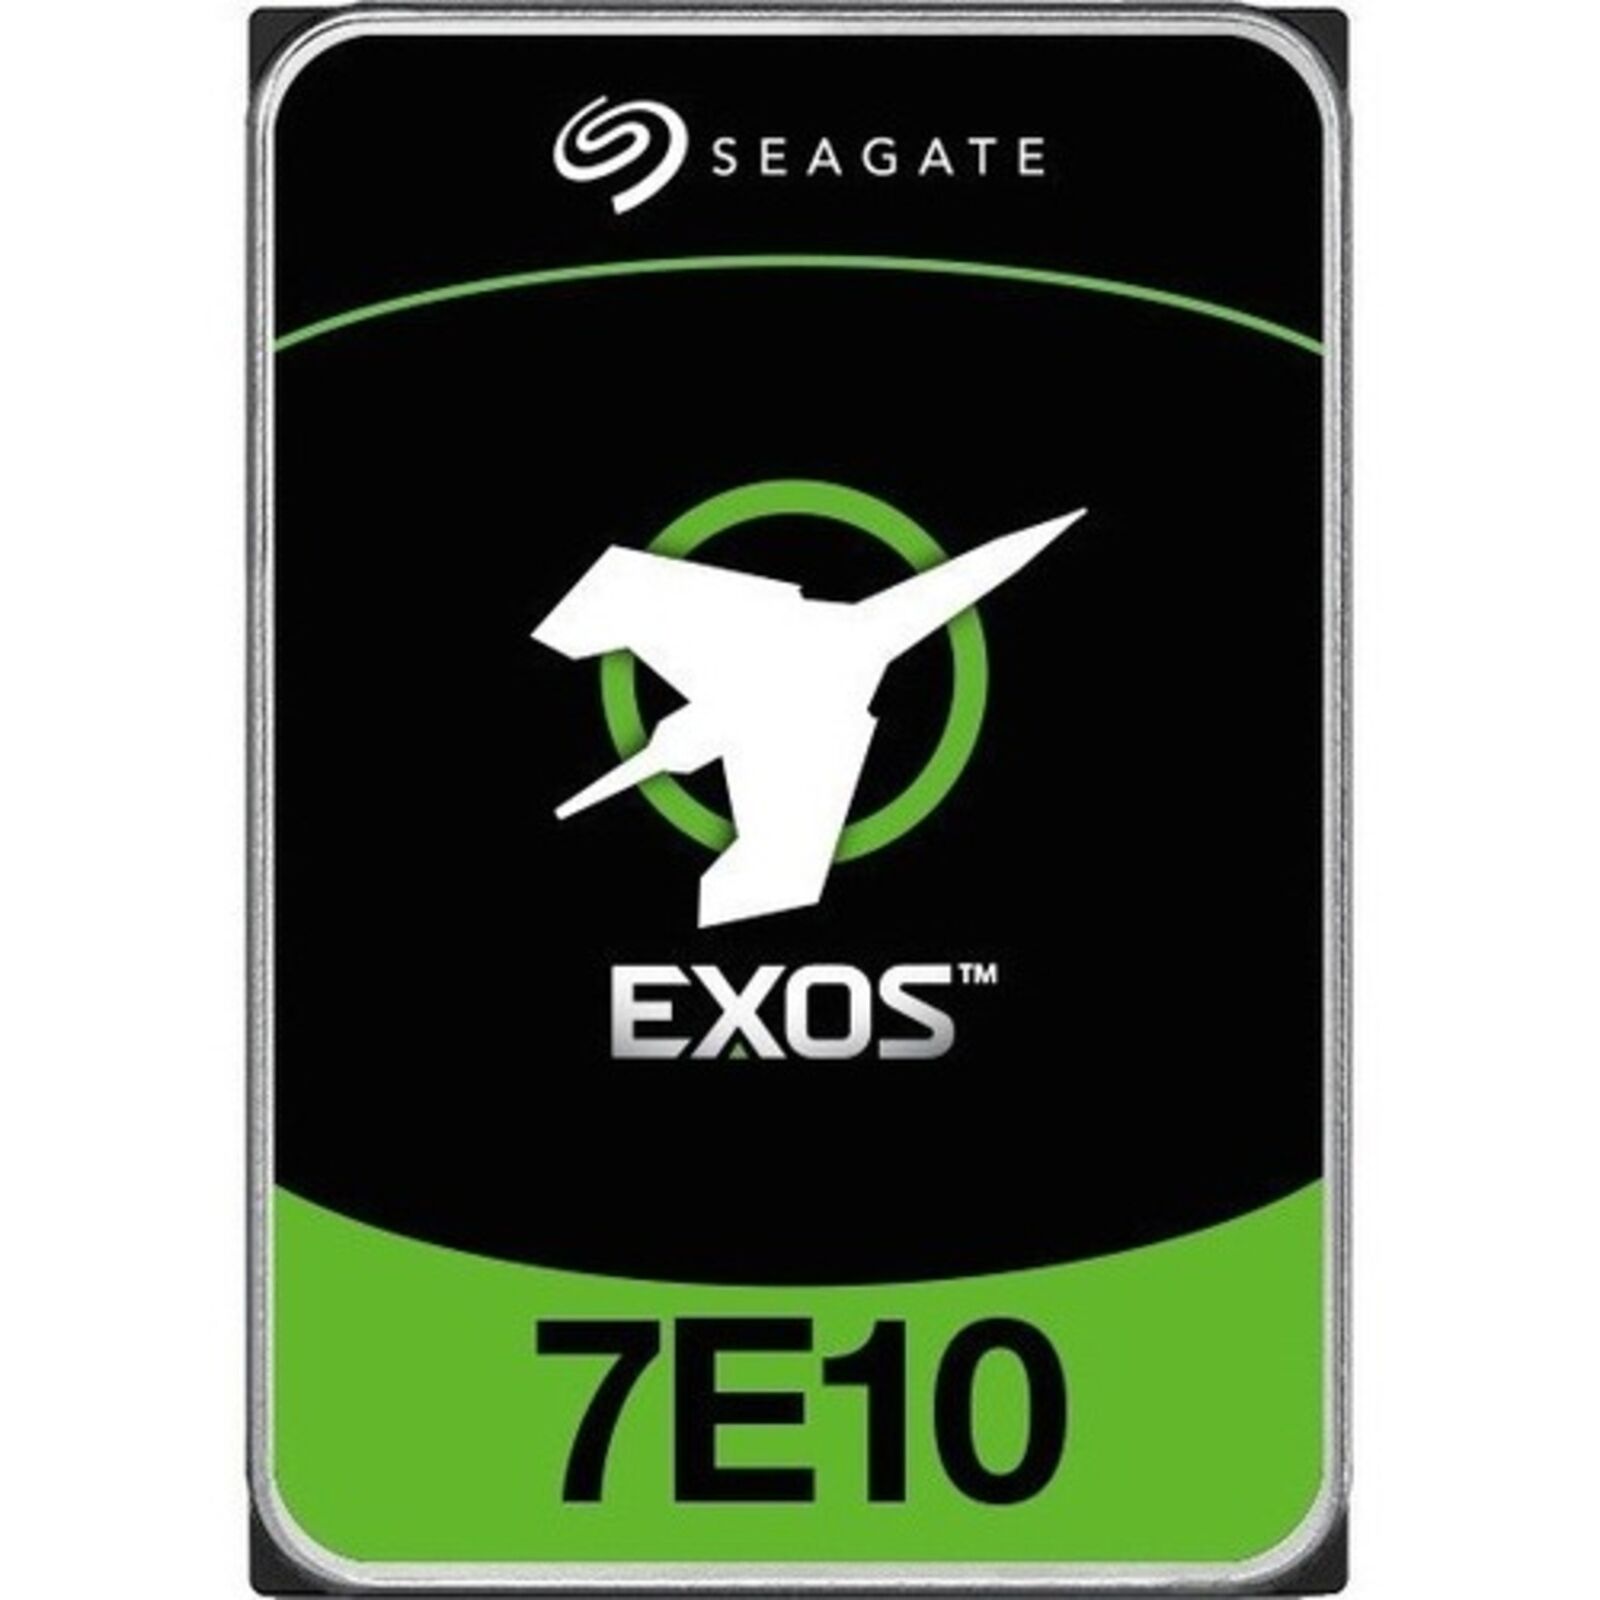 Seagate - ST4000NM026B - Seagate Exos 7E10 ST4000NM026B 4 TB Hard Drive -